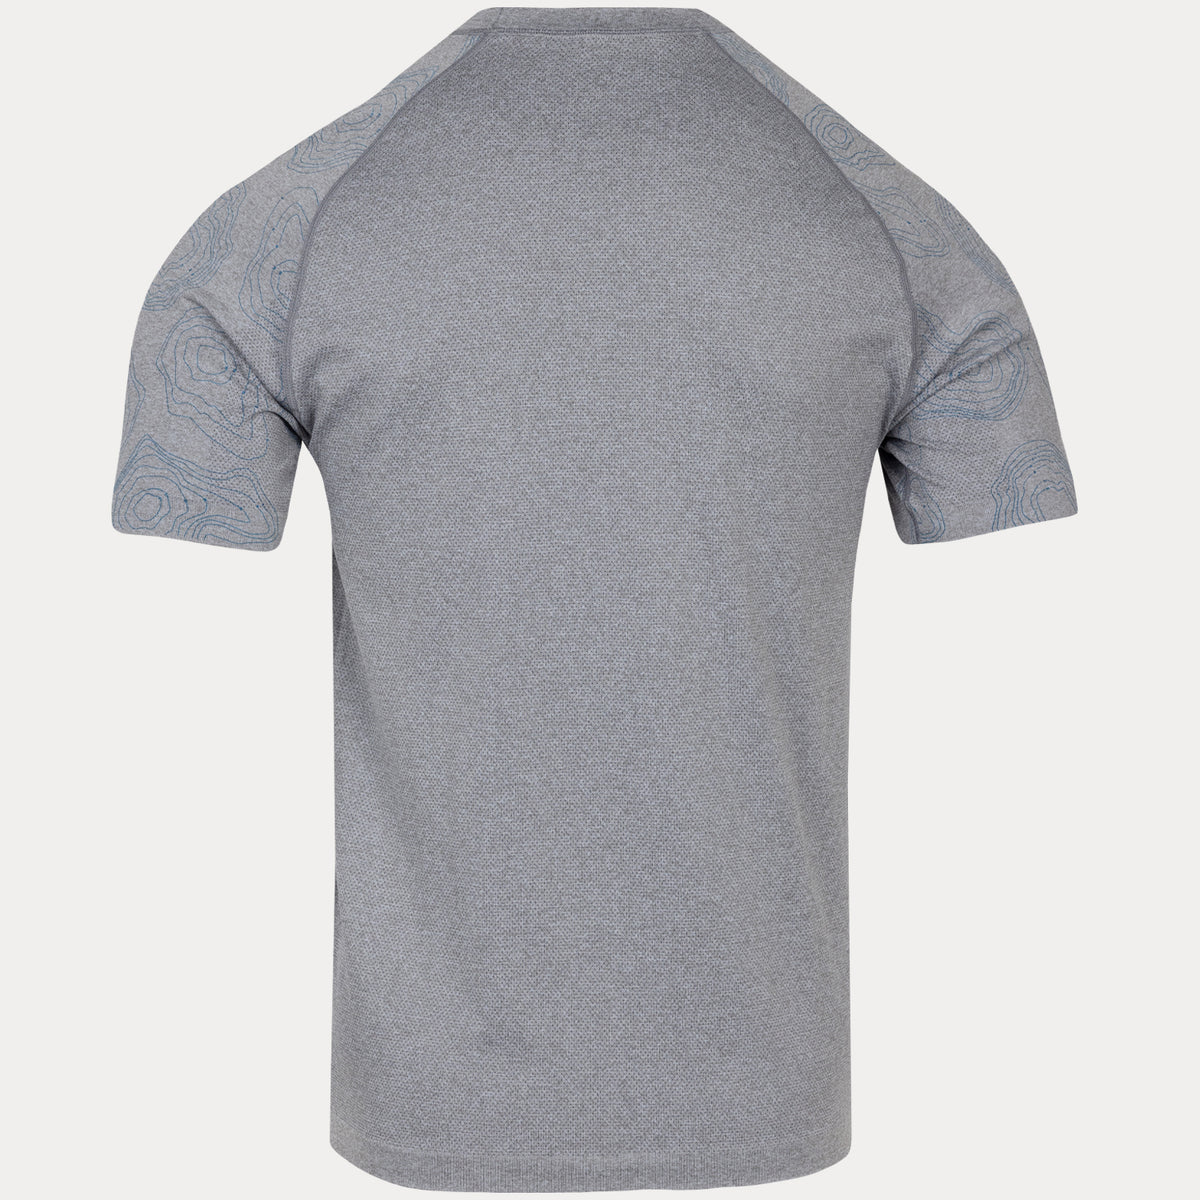 rear view of grey t-shirt